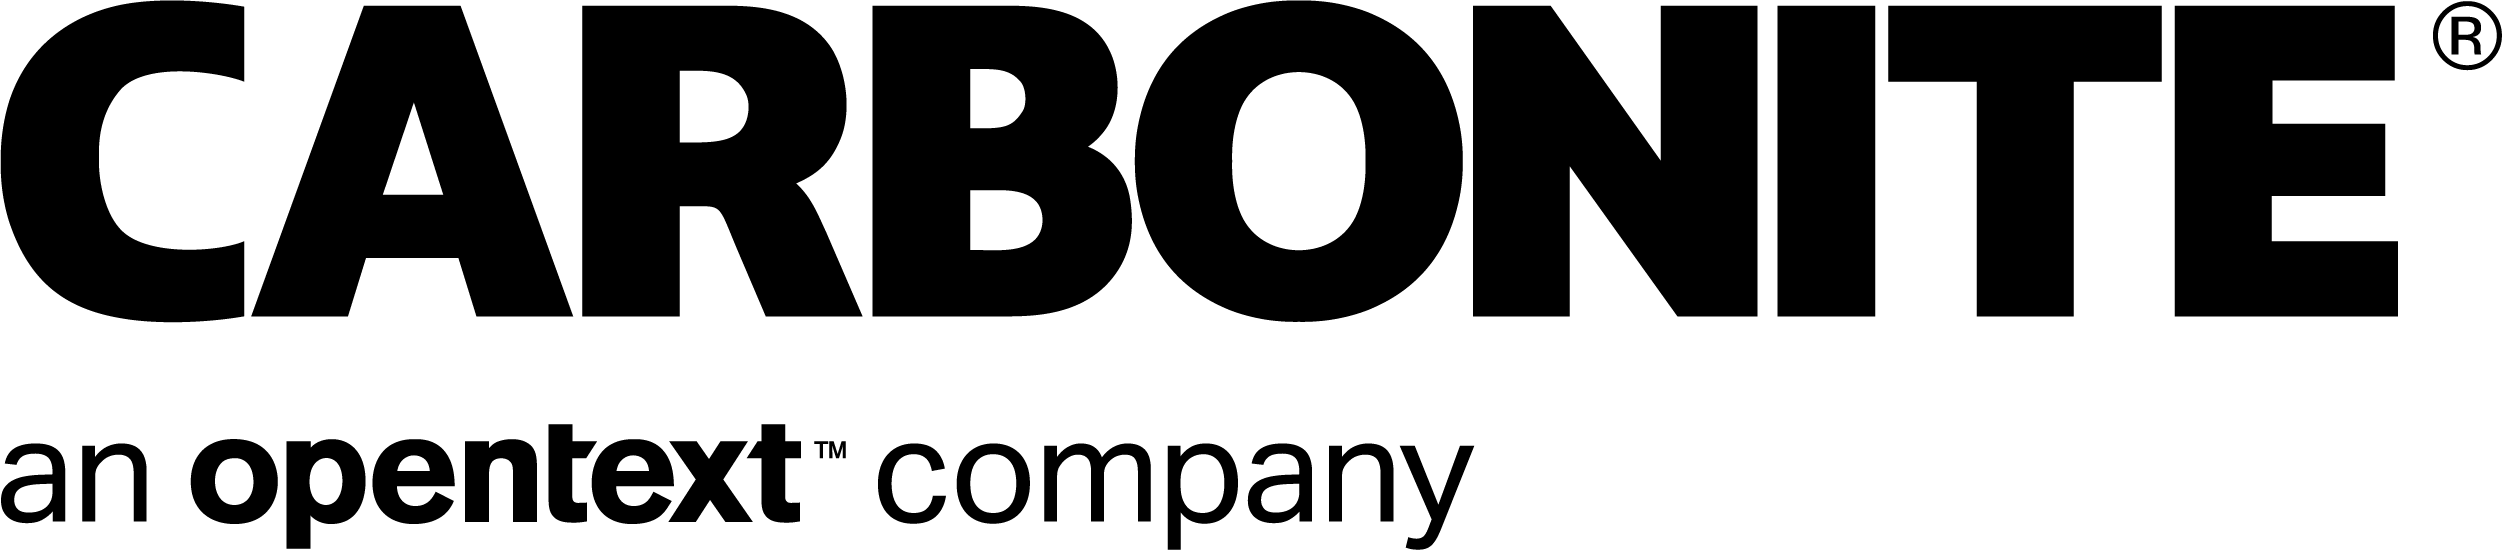 carbonite logo